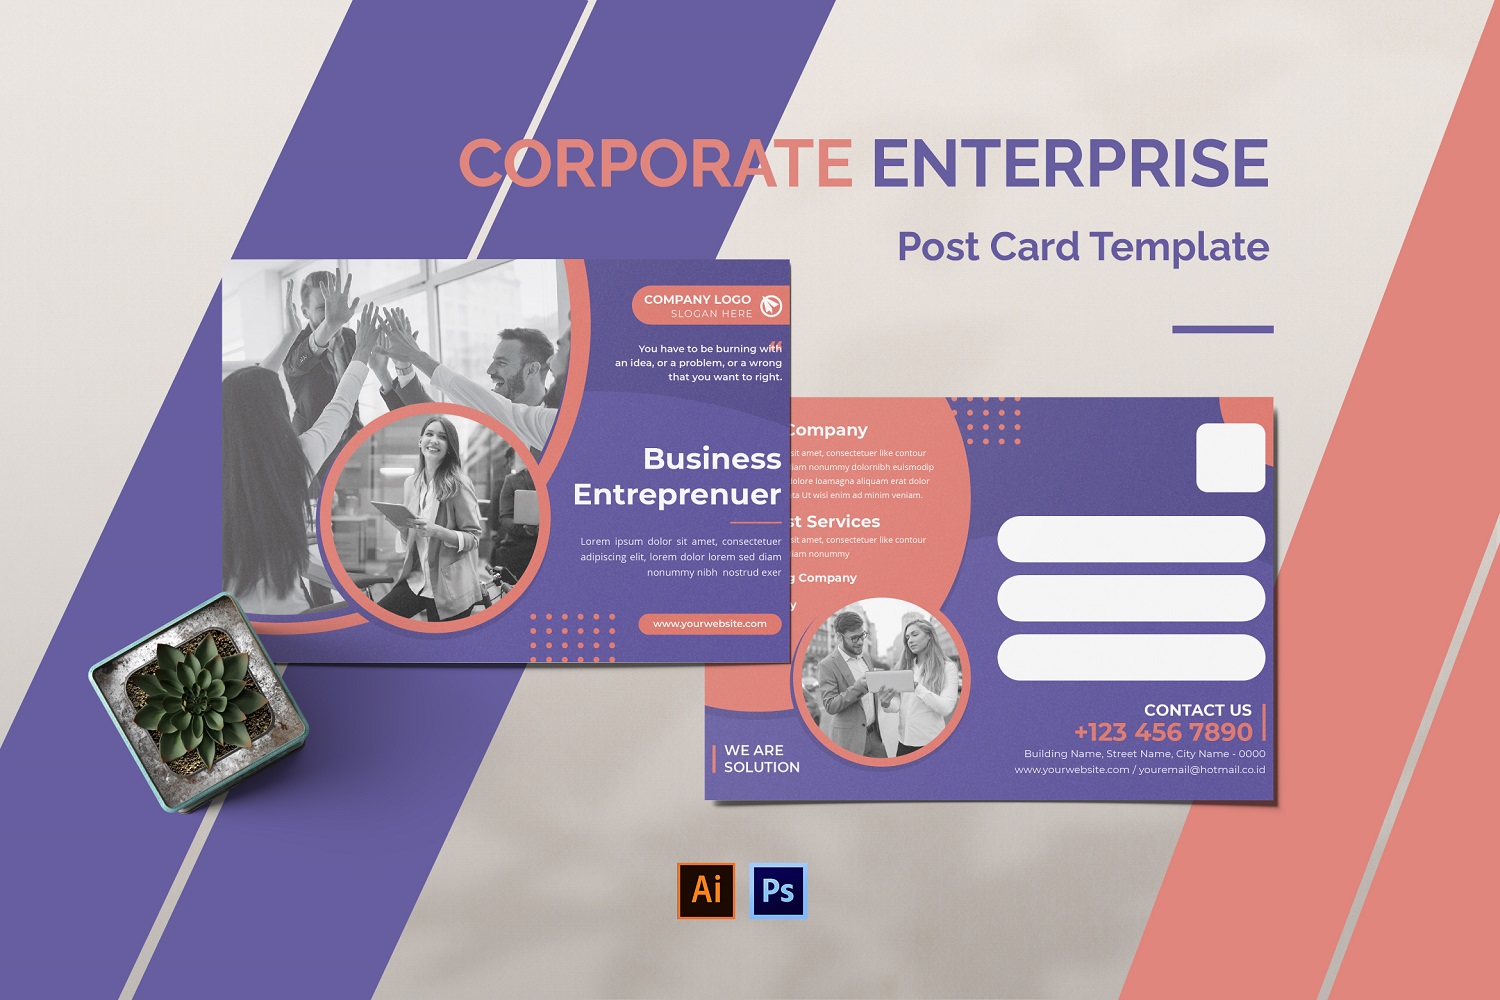 Corporate Enterprise Post Card